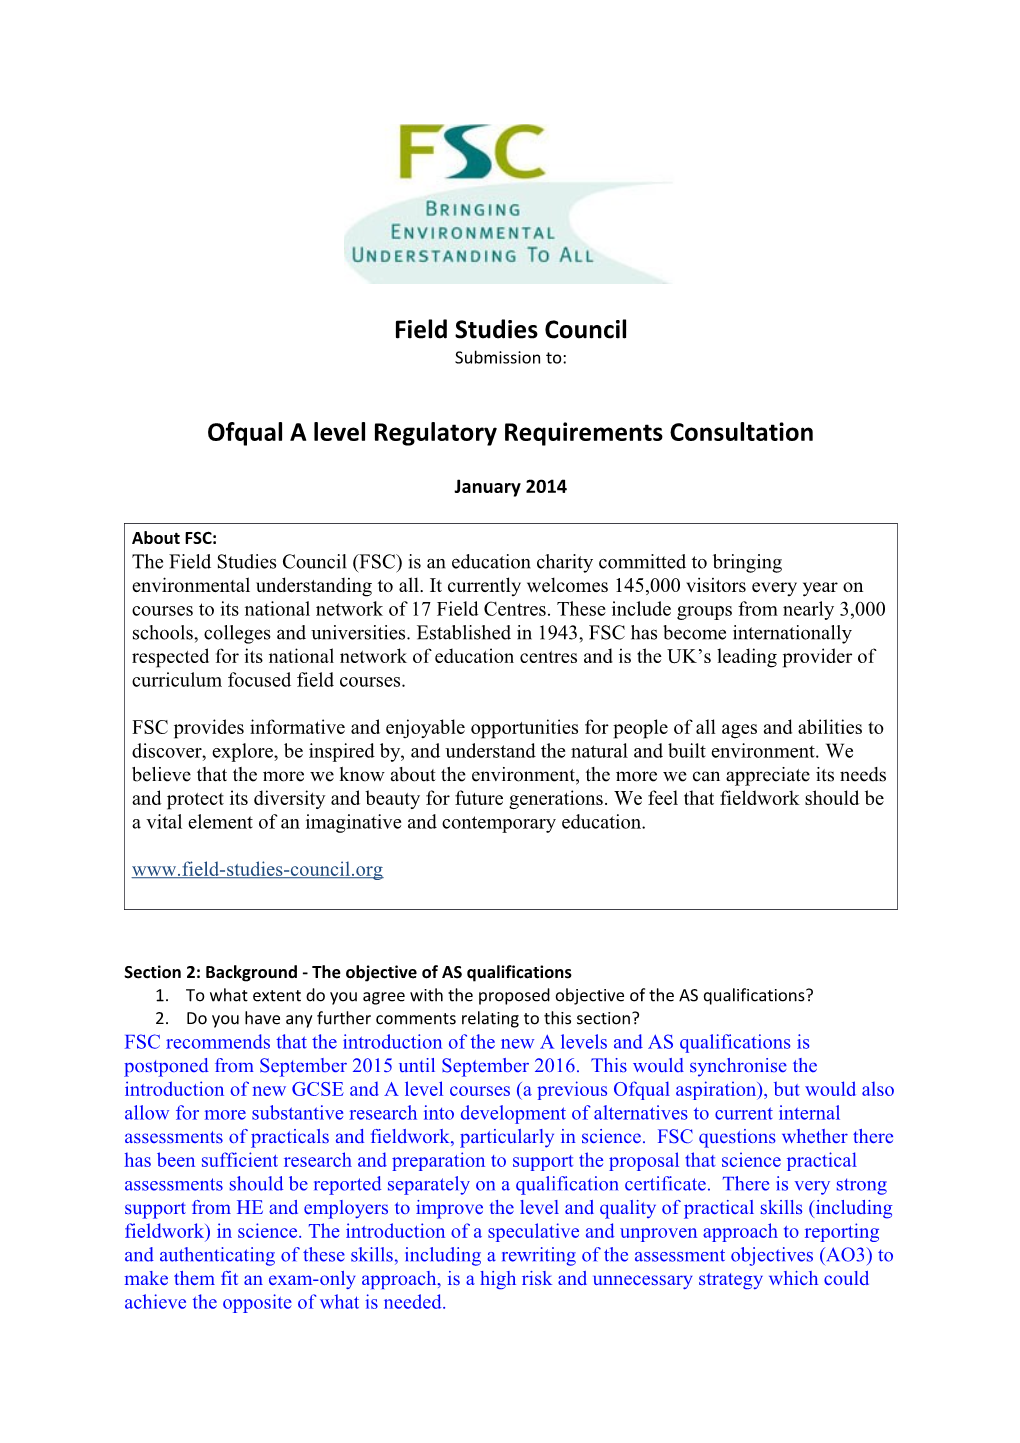 Ofquala Level Regulatory Requirements Consultation